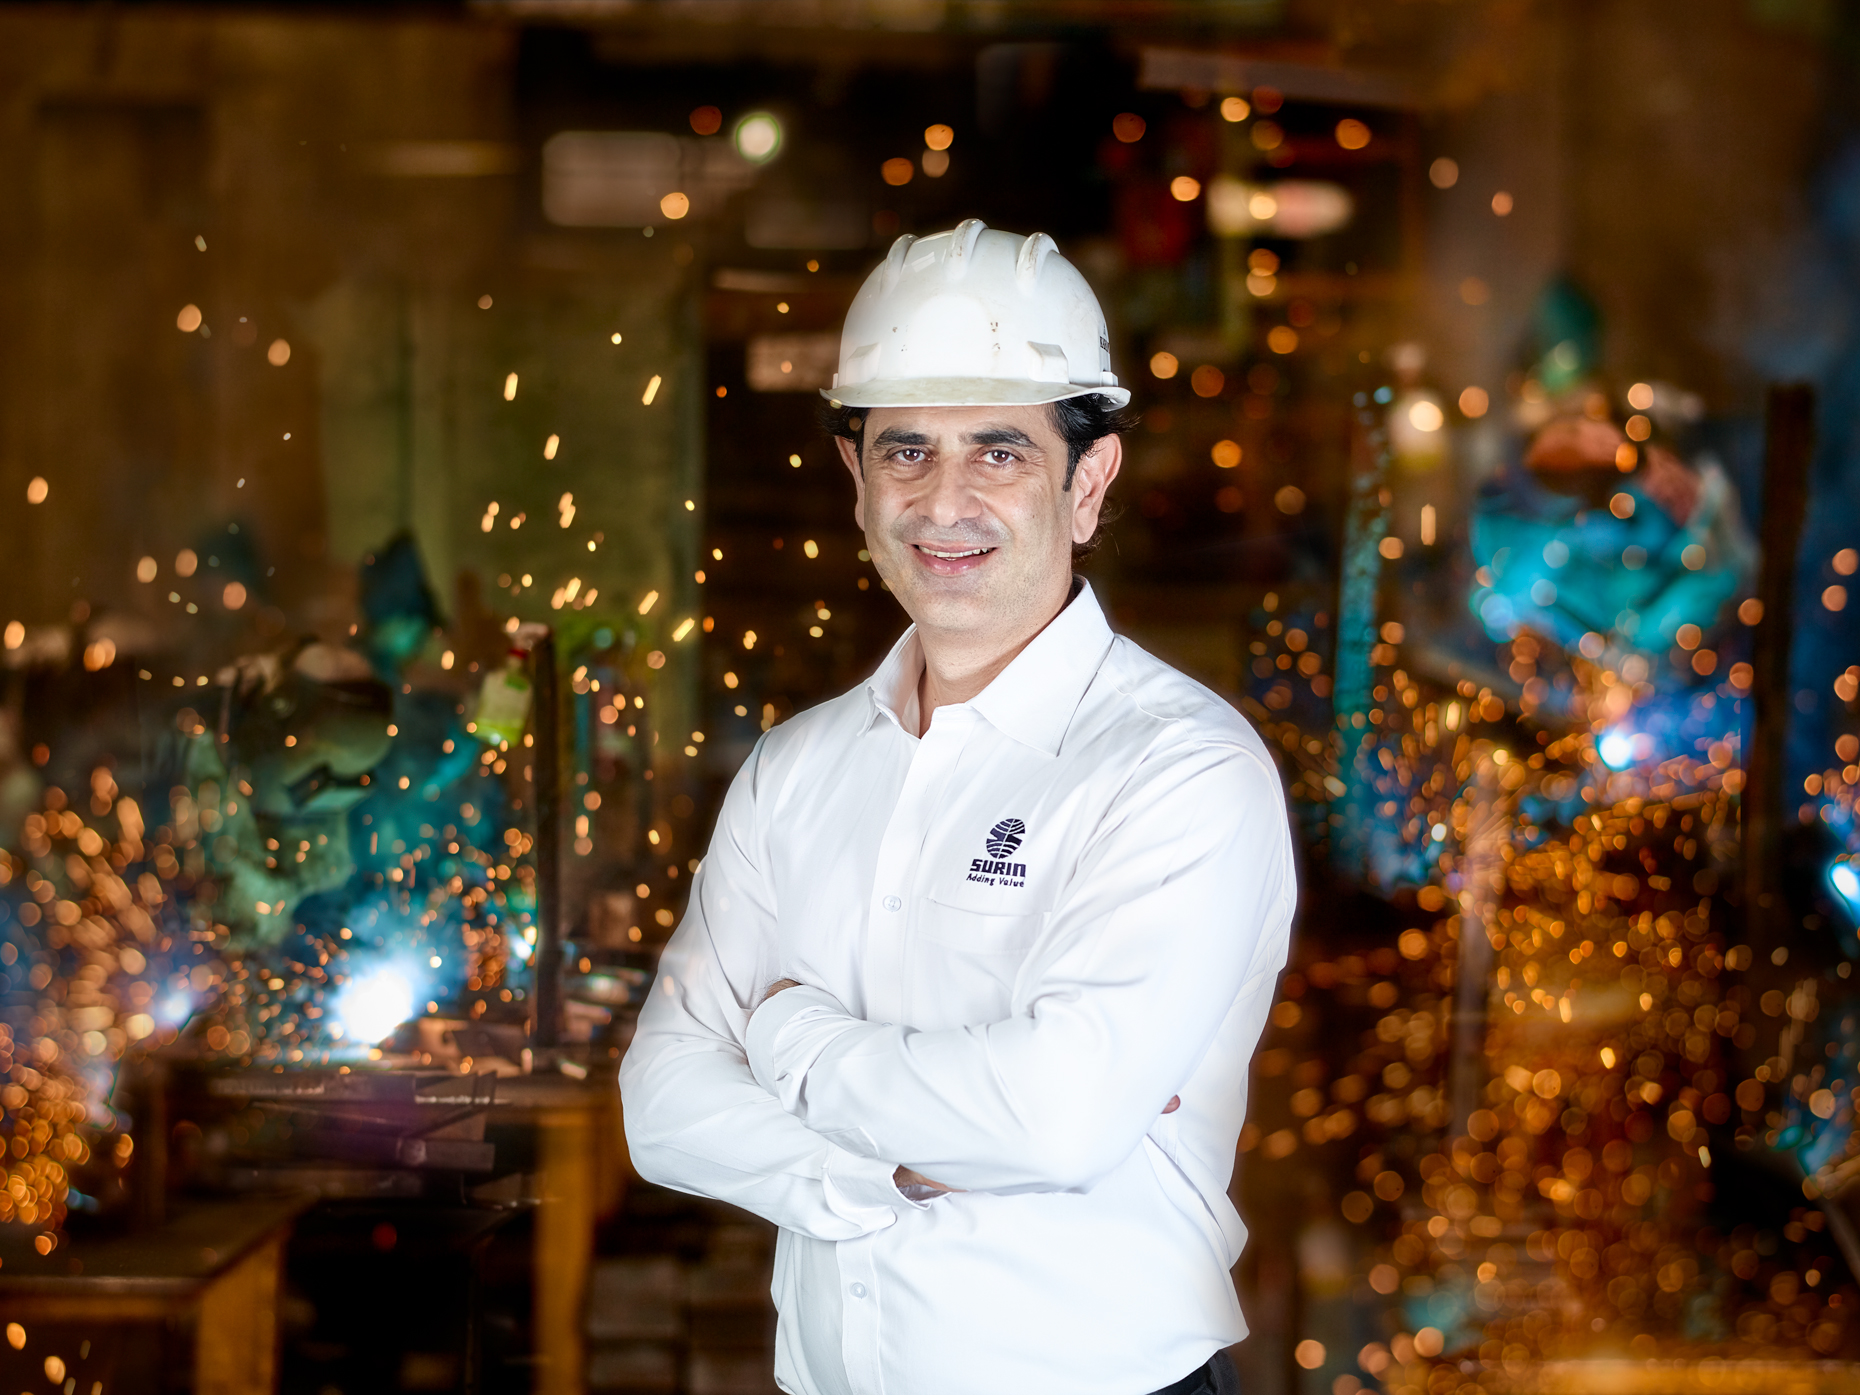 Corporate Portrait & Executive Photoshoot for Surin Autombiles, CEO & Managing Director - Aman Choudhari